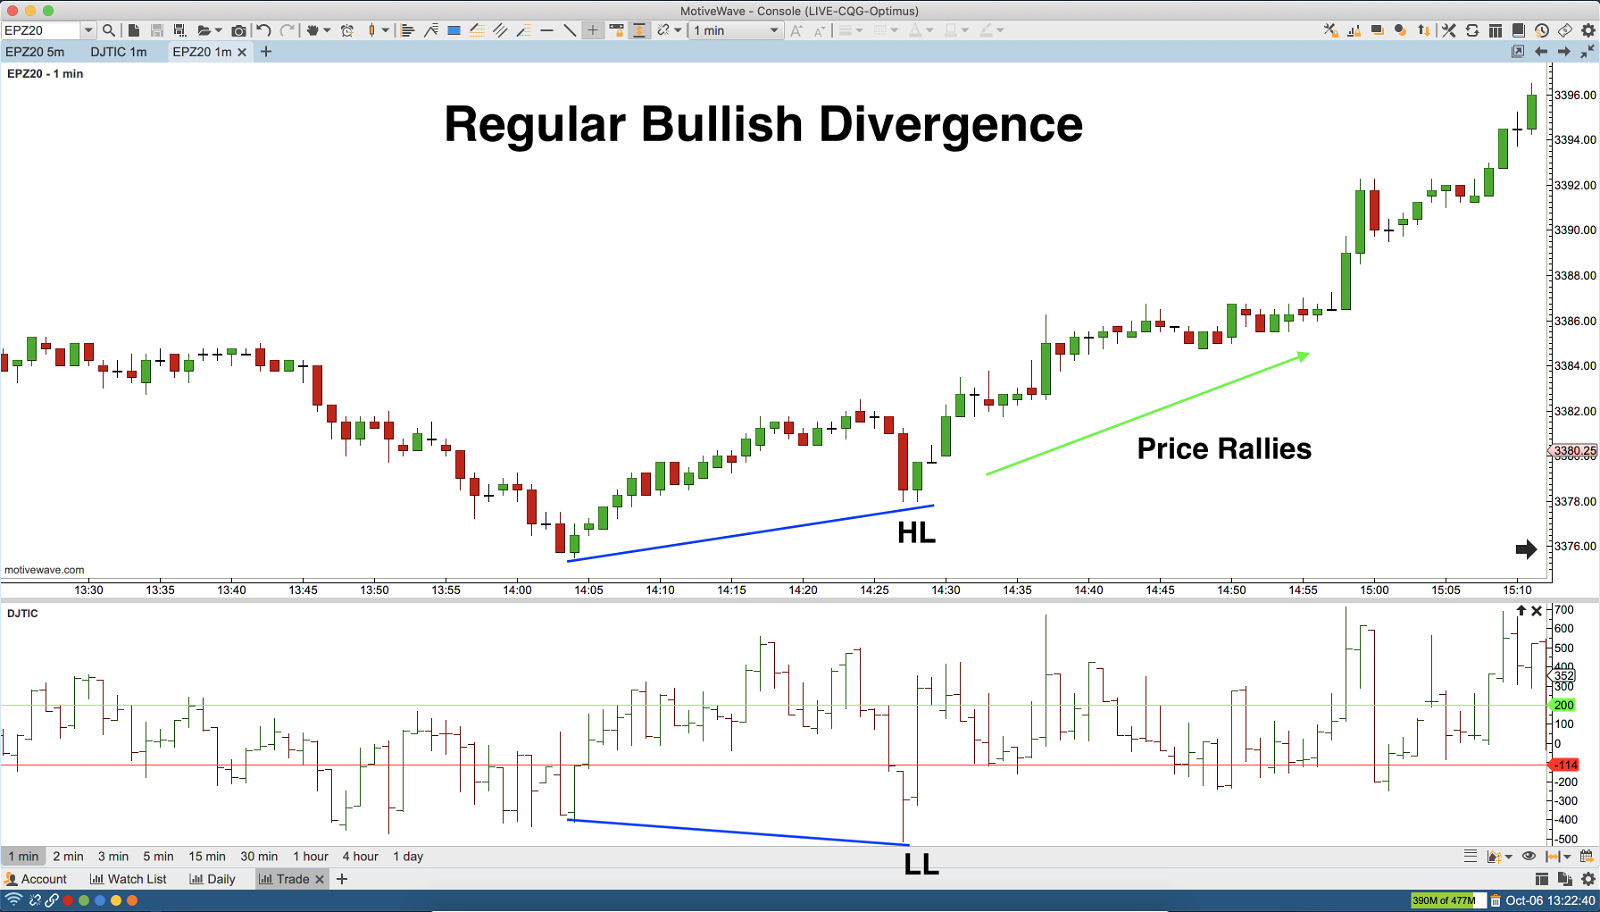 Regular Bullish Divergence NYSE Tick